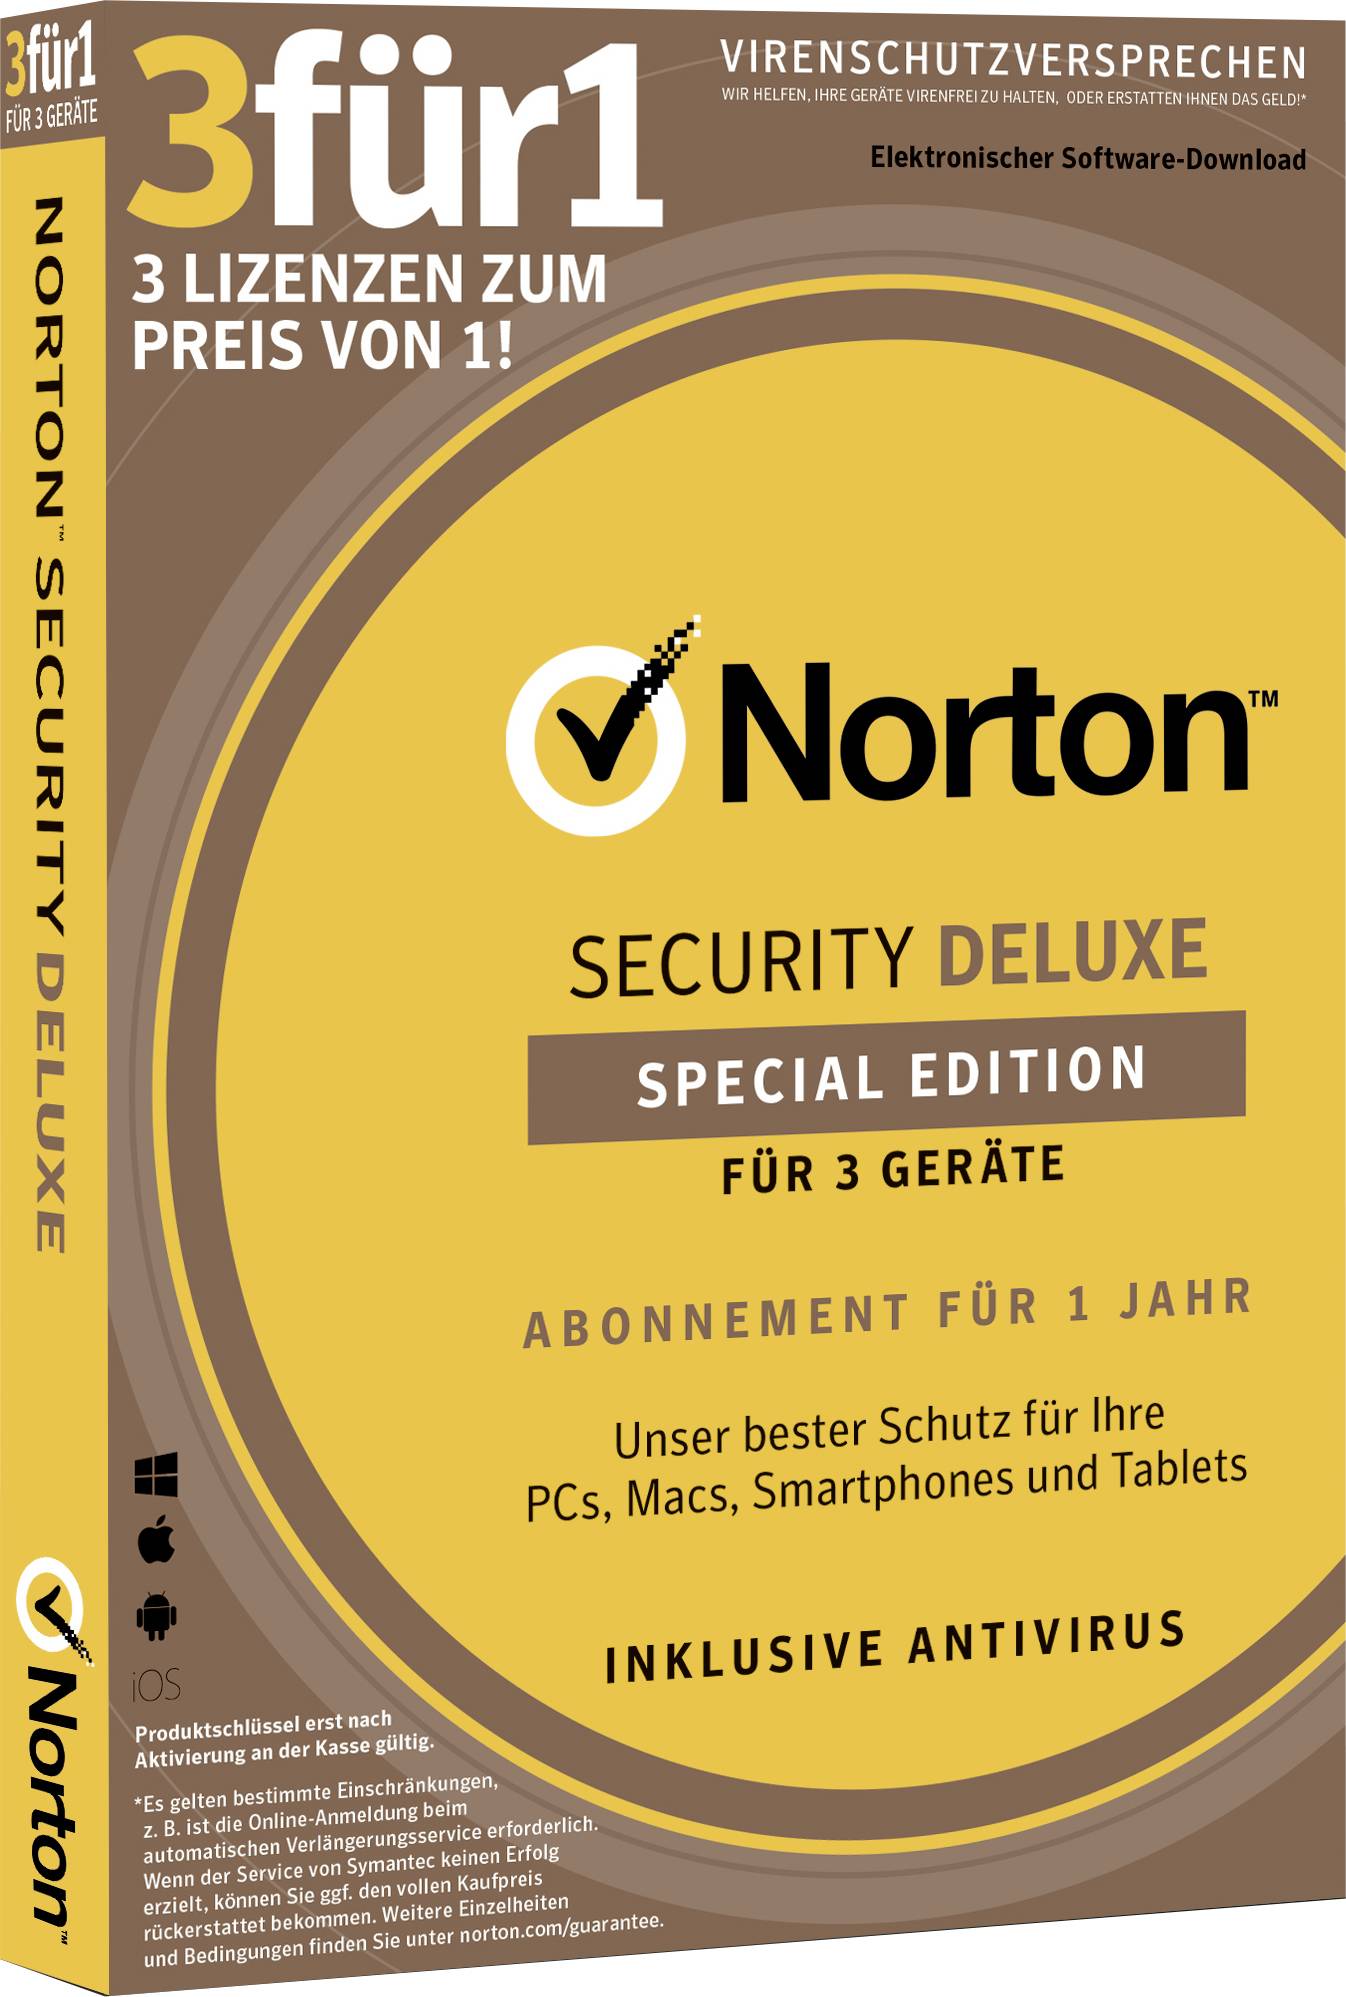 norton life lock account